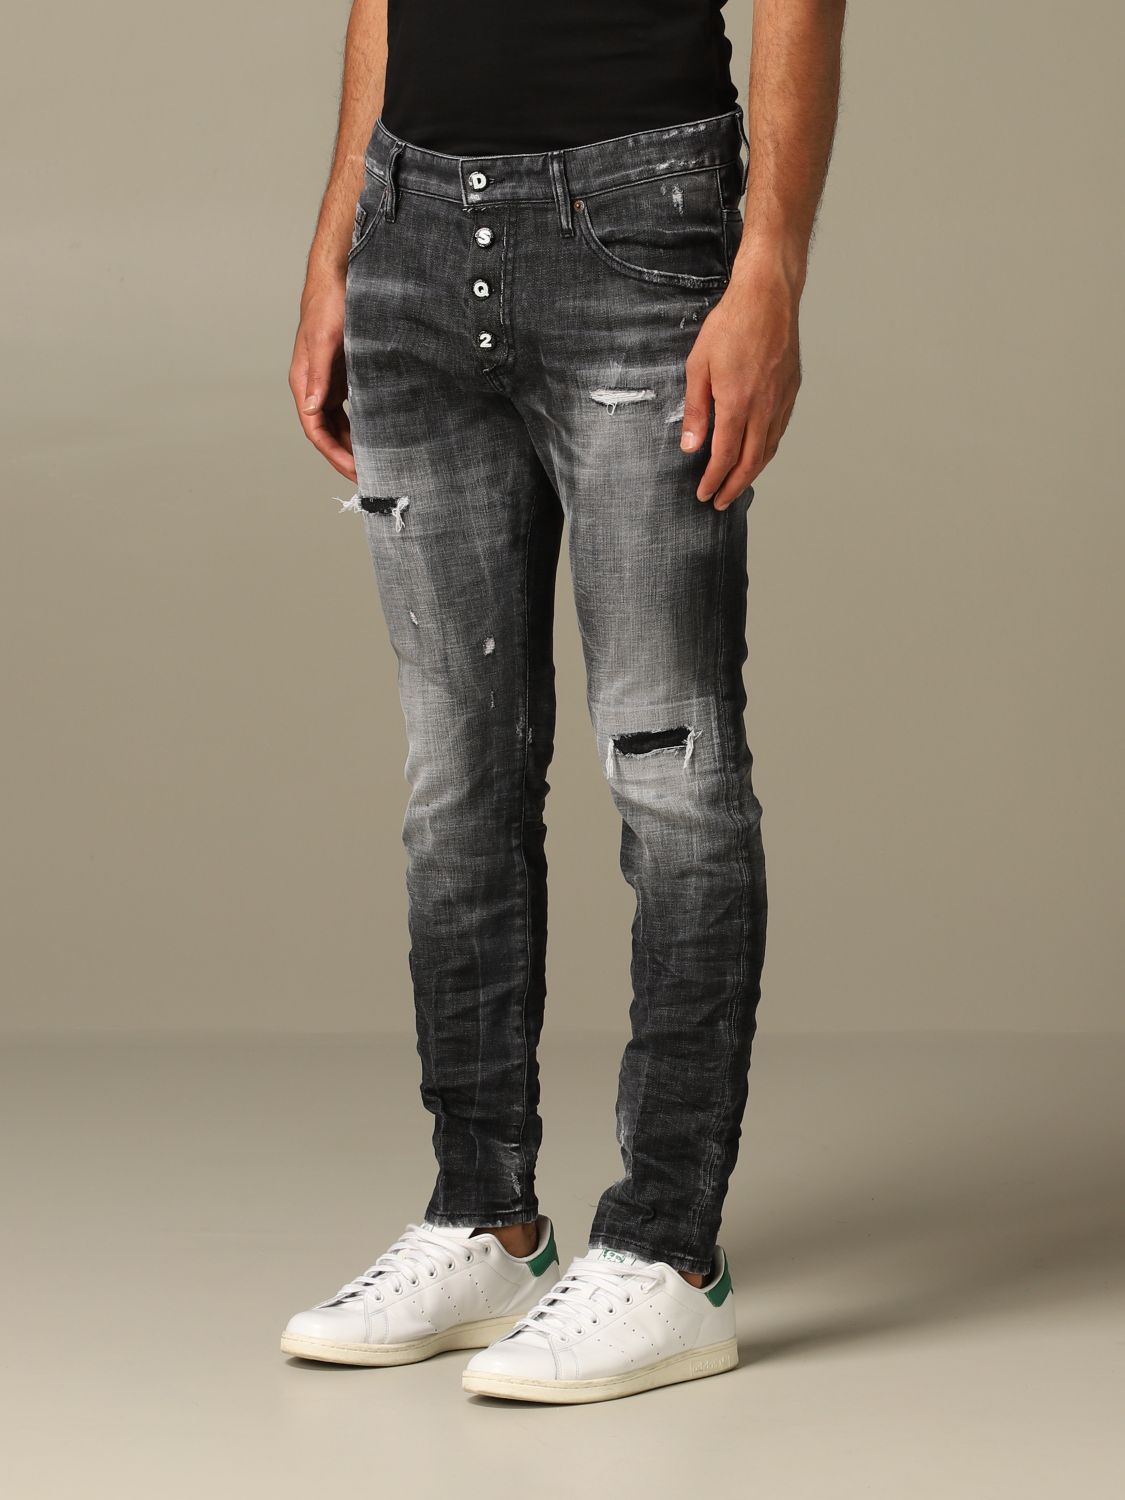 Dsquared2 Outlet: slim fit Skater jeans with breaks - Black | Jeans ...